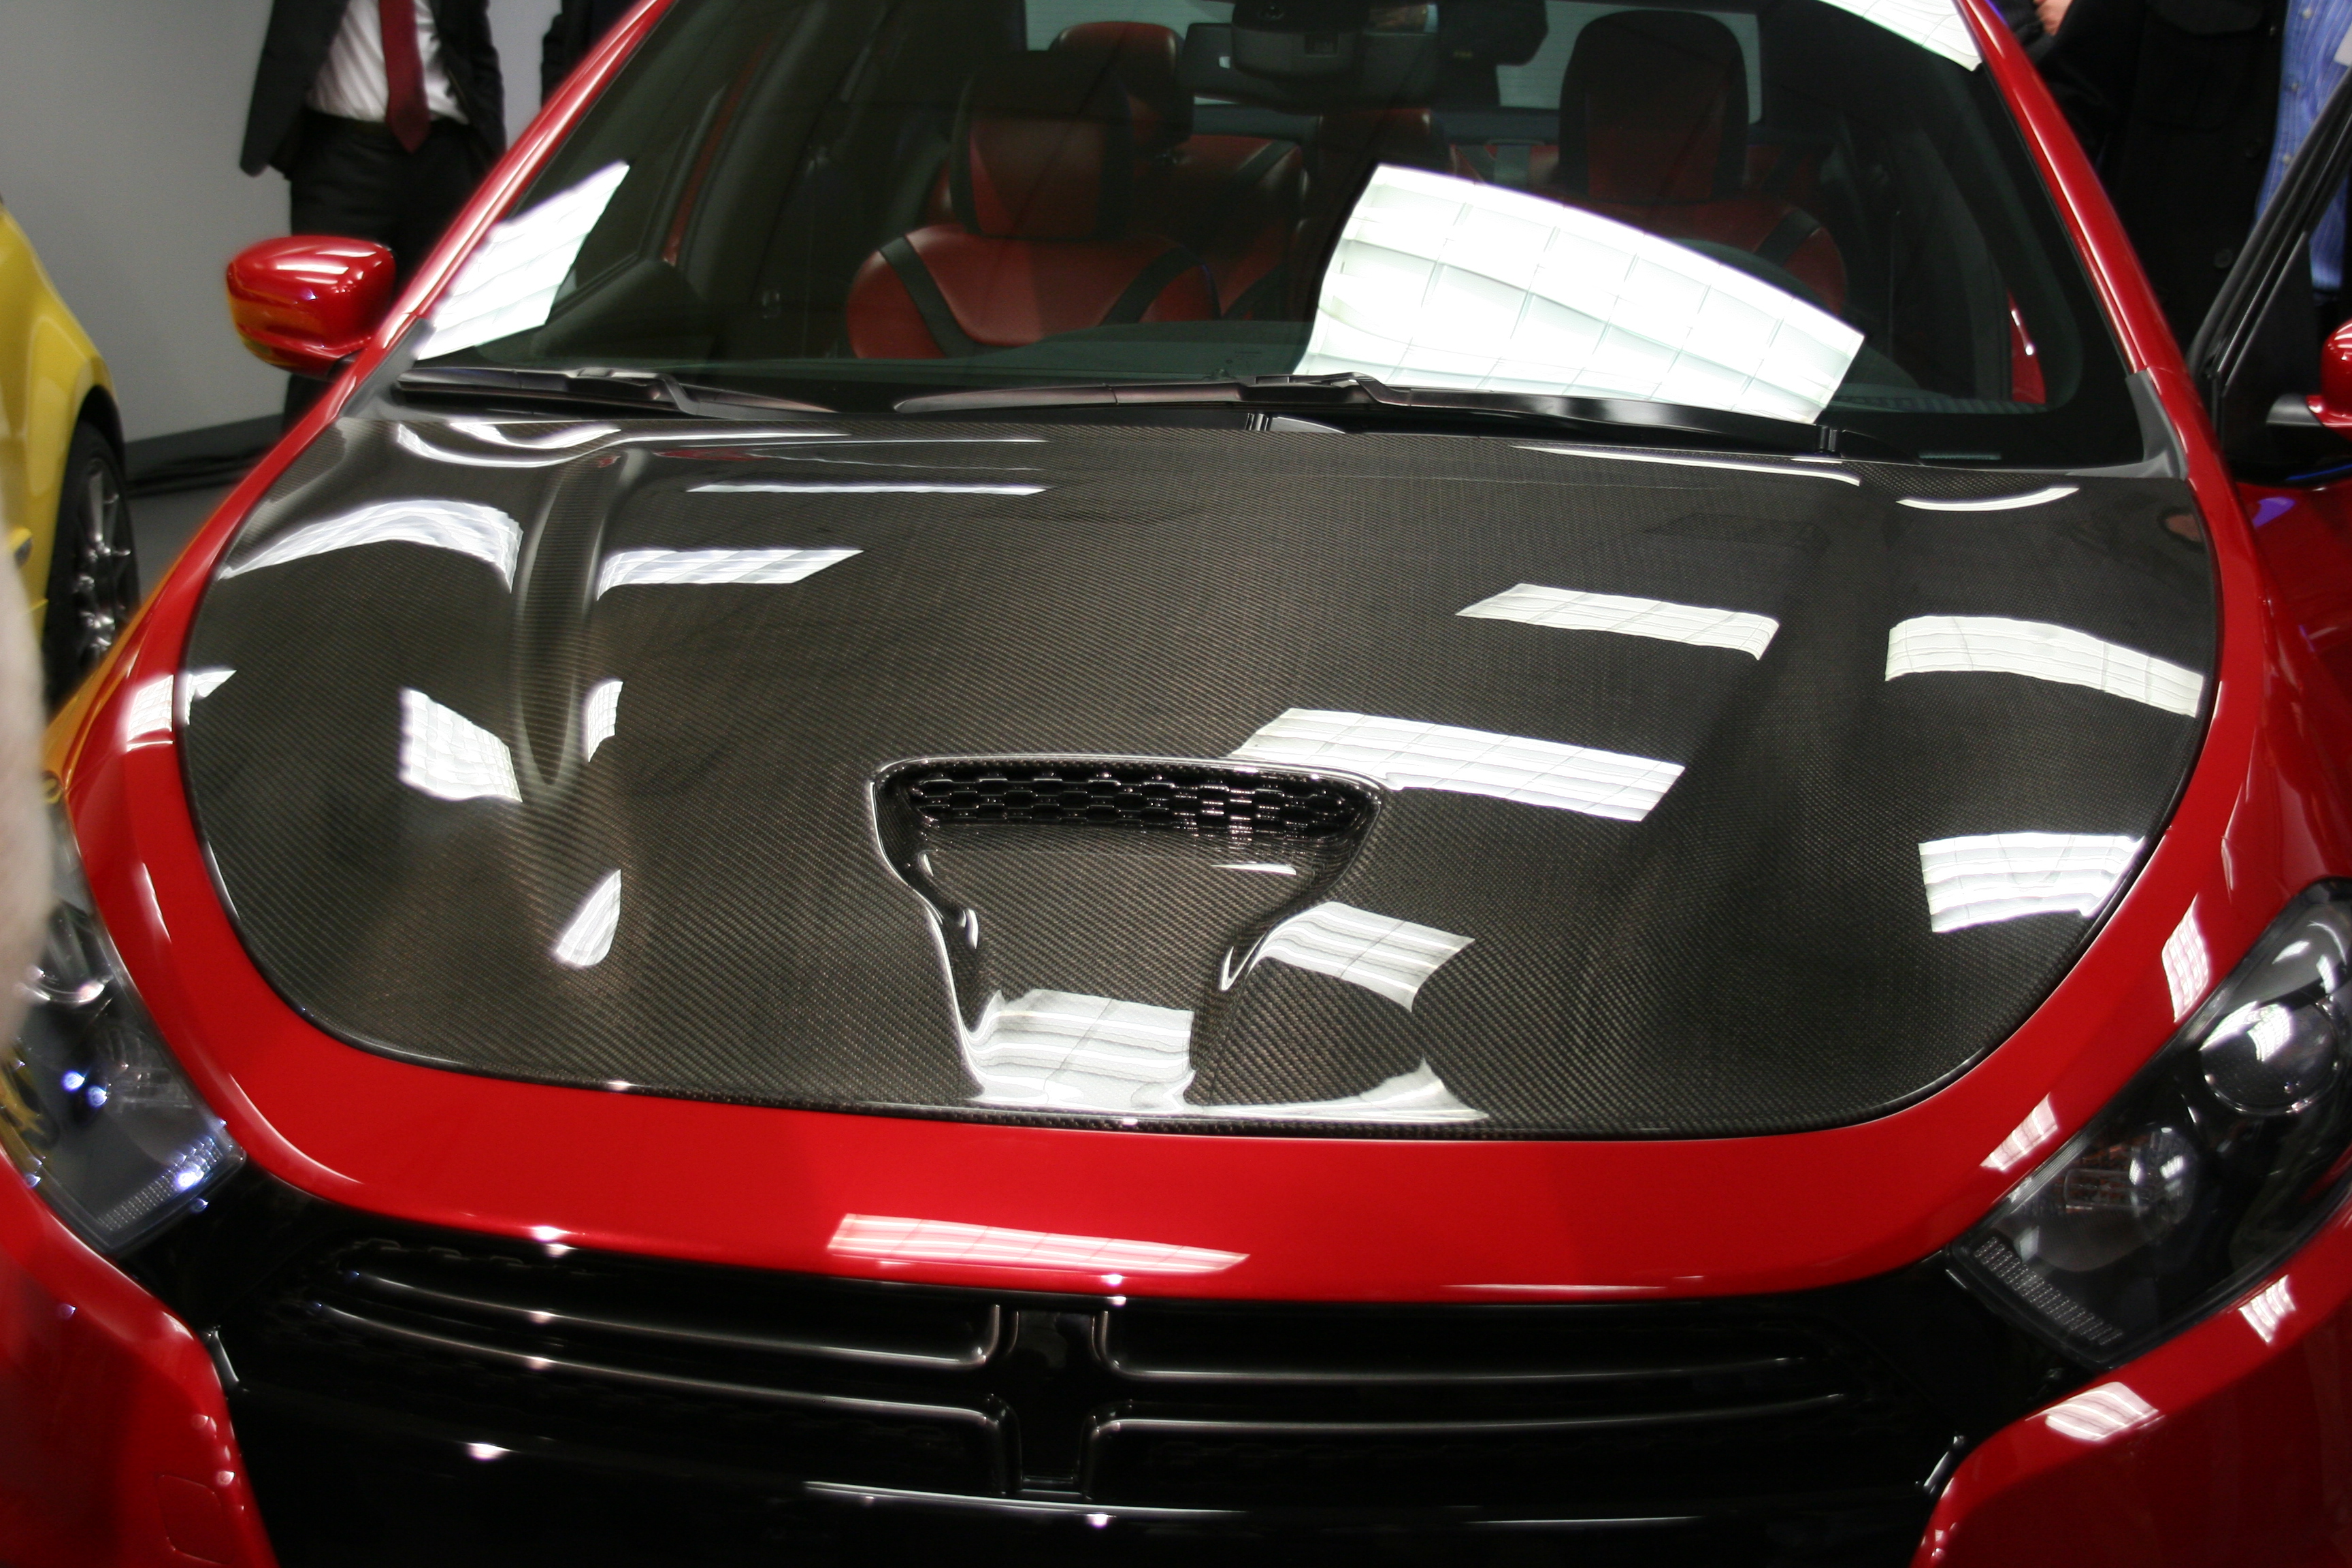 Moparized 2013 Dodge Dart GTS 210 Tribute | Flickr - Photo Sharing!